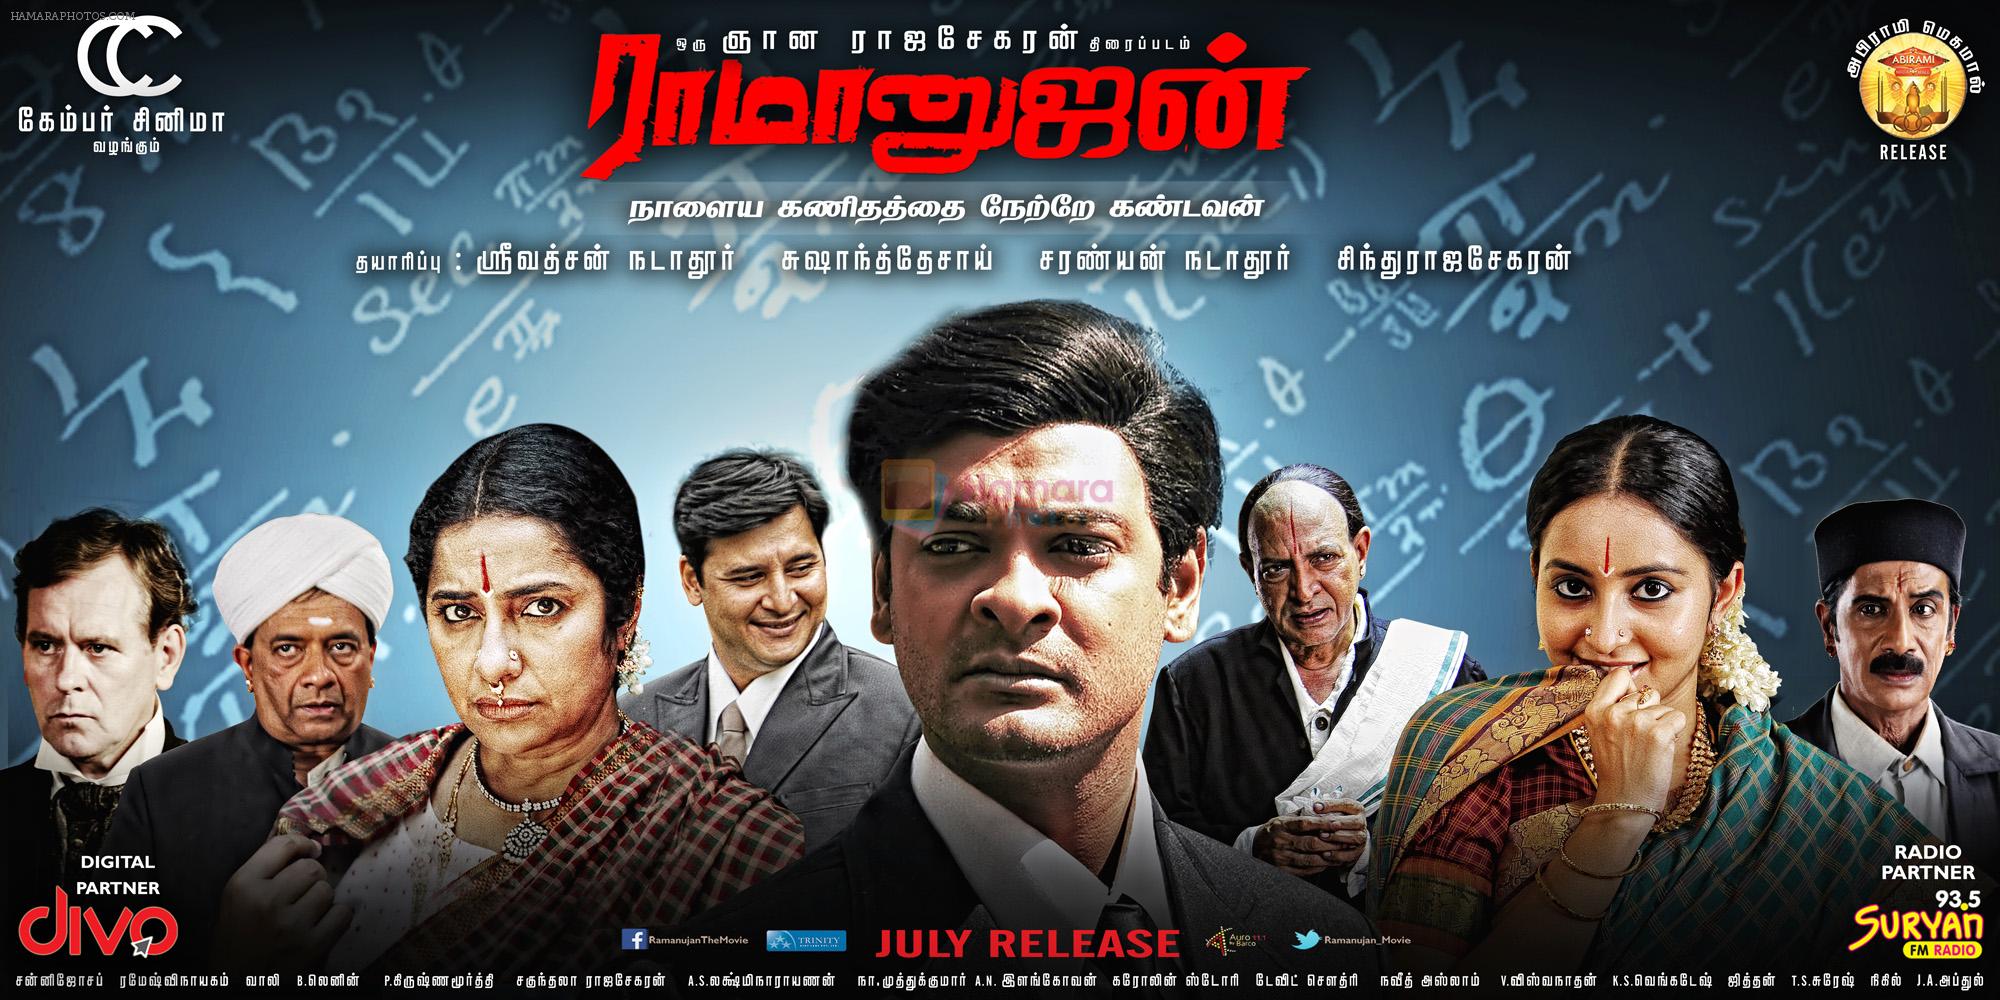 Ramanujan Trailer Launch Posters